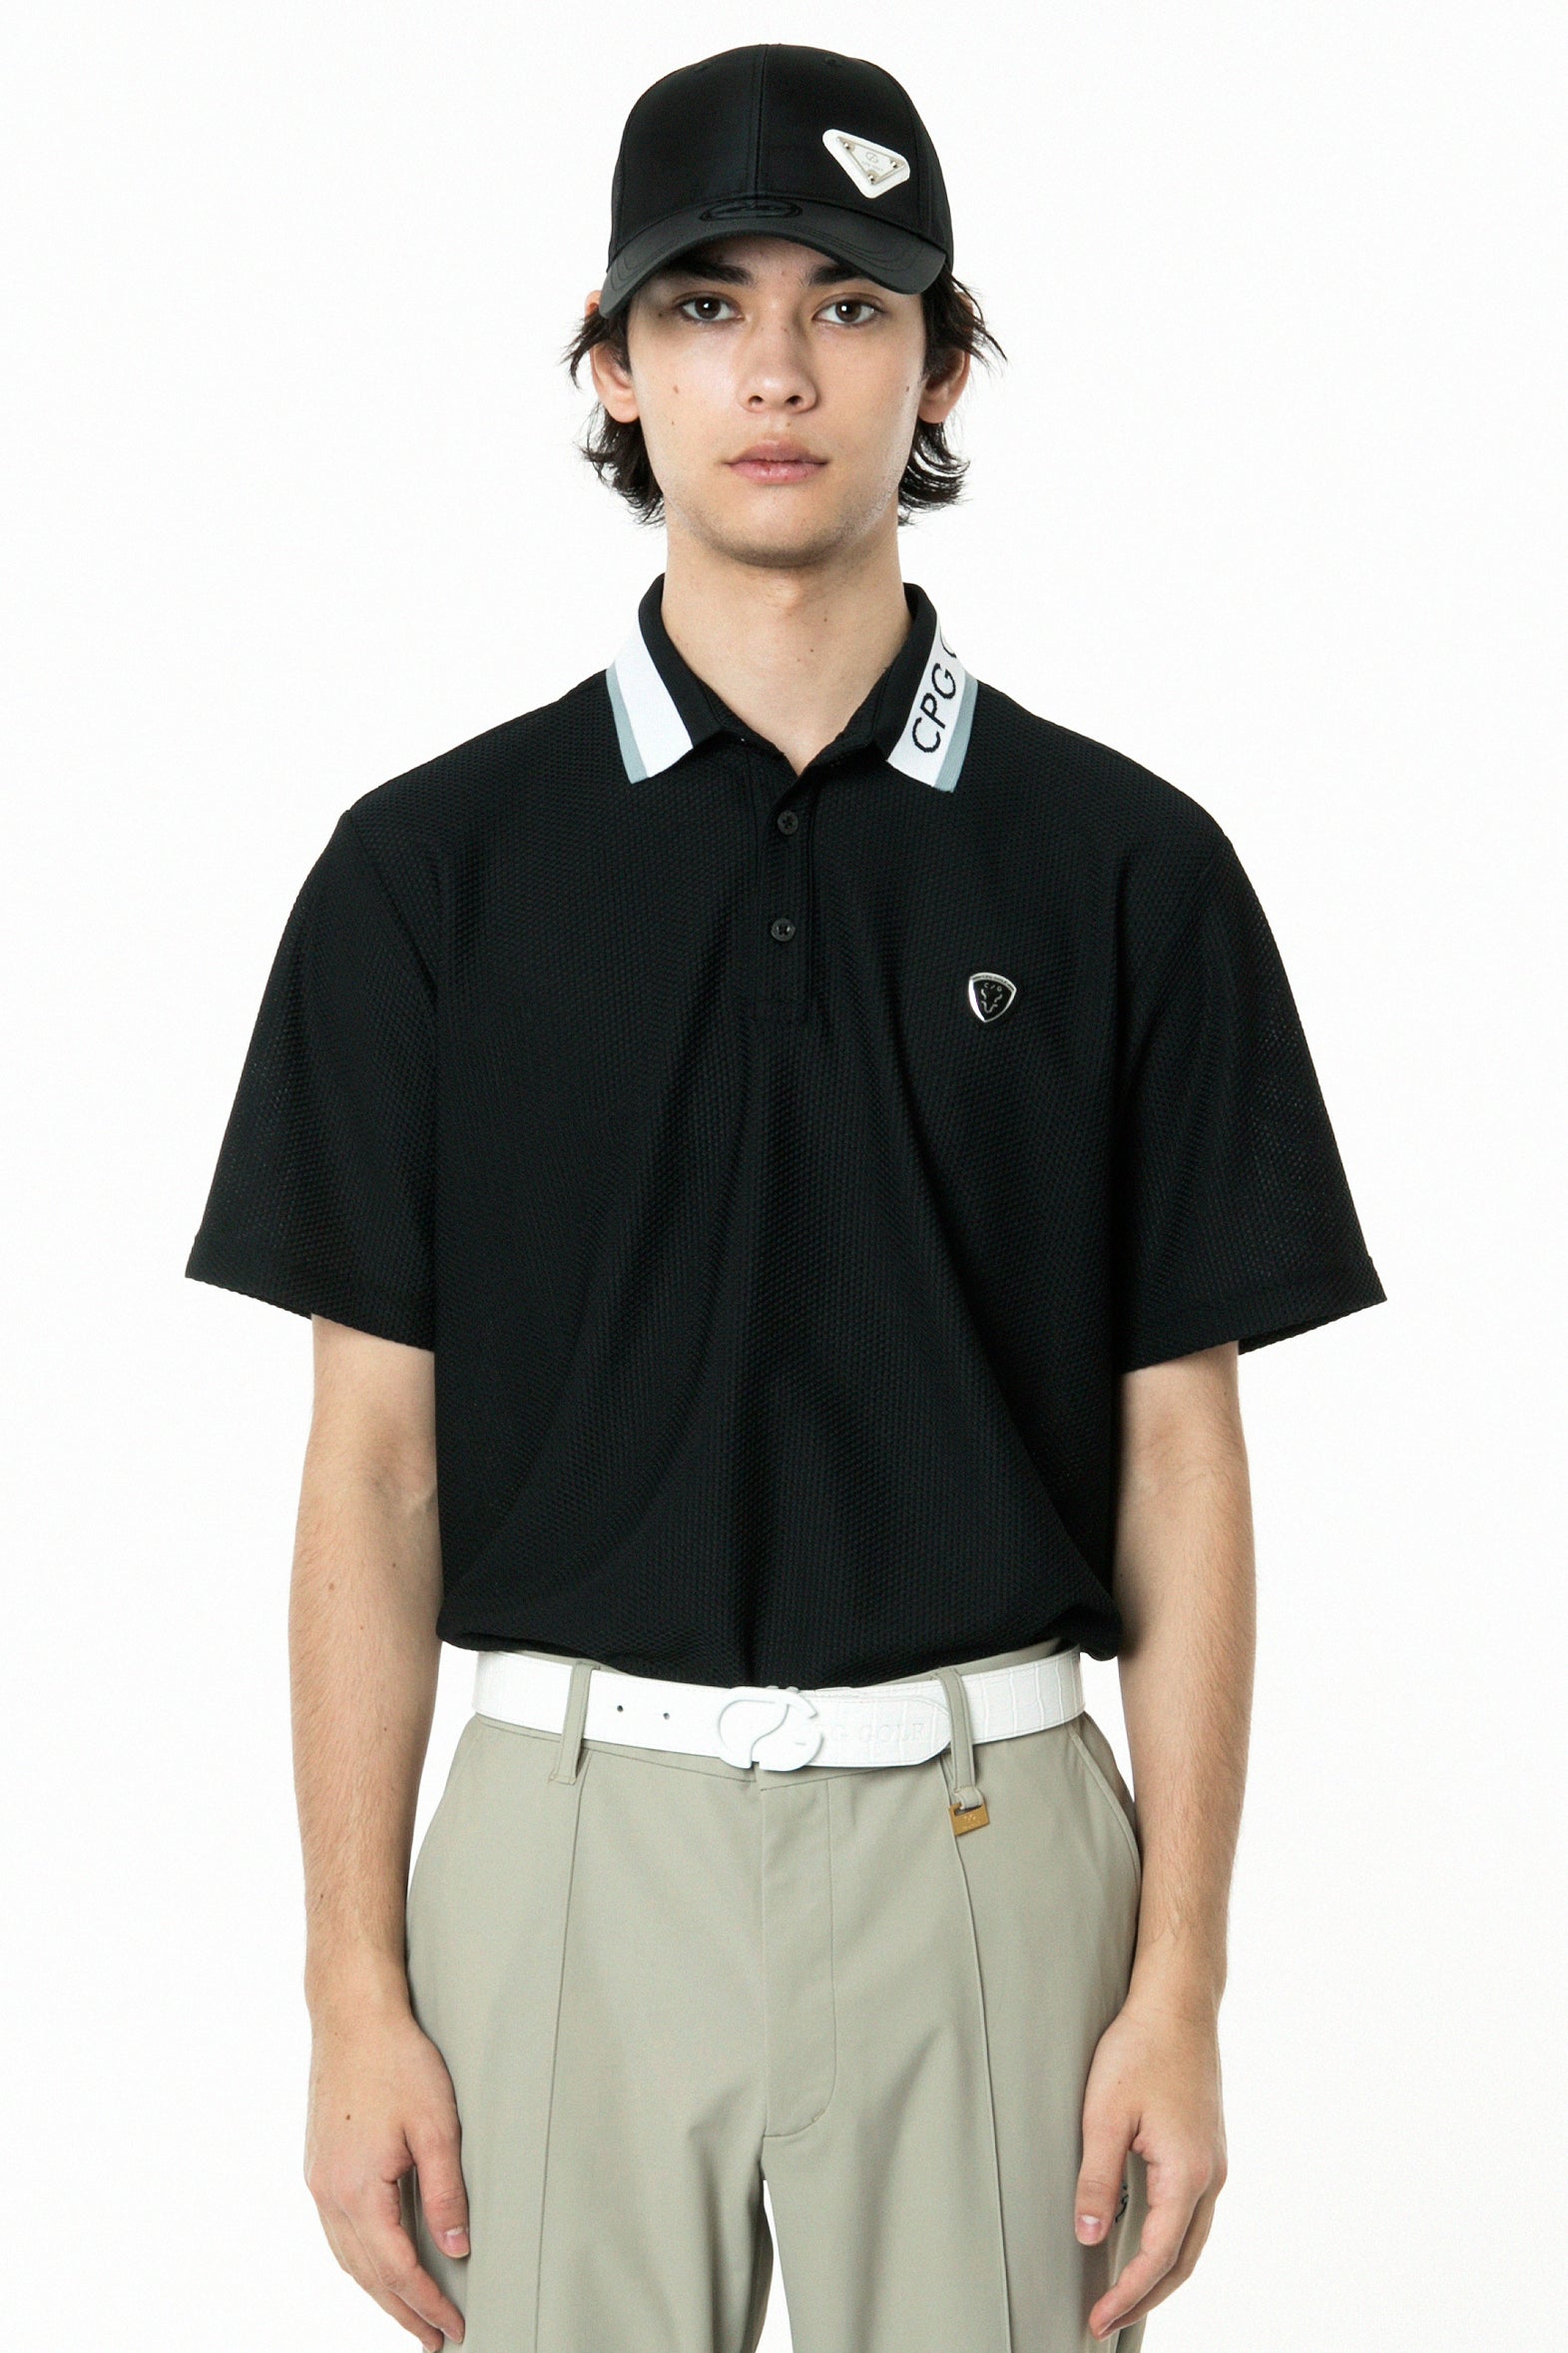 CPG GOLF シーピージーゴルフ ゴルフウェア メンズ ポロシャツ 半袖 衿 